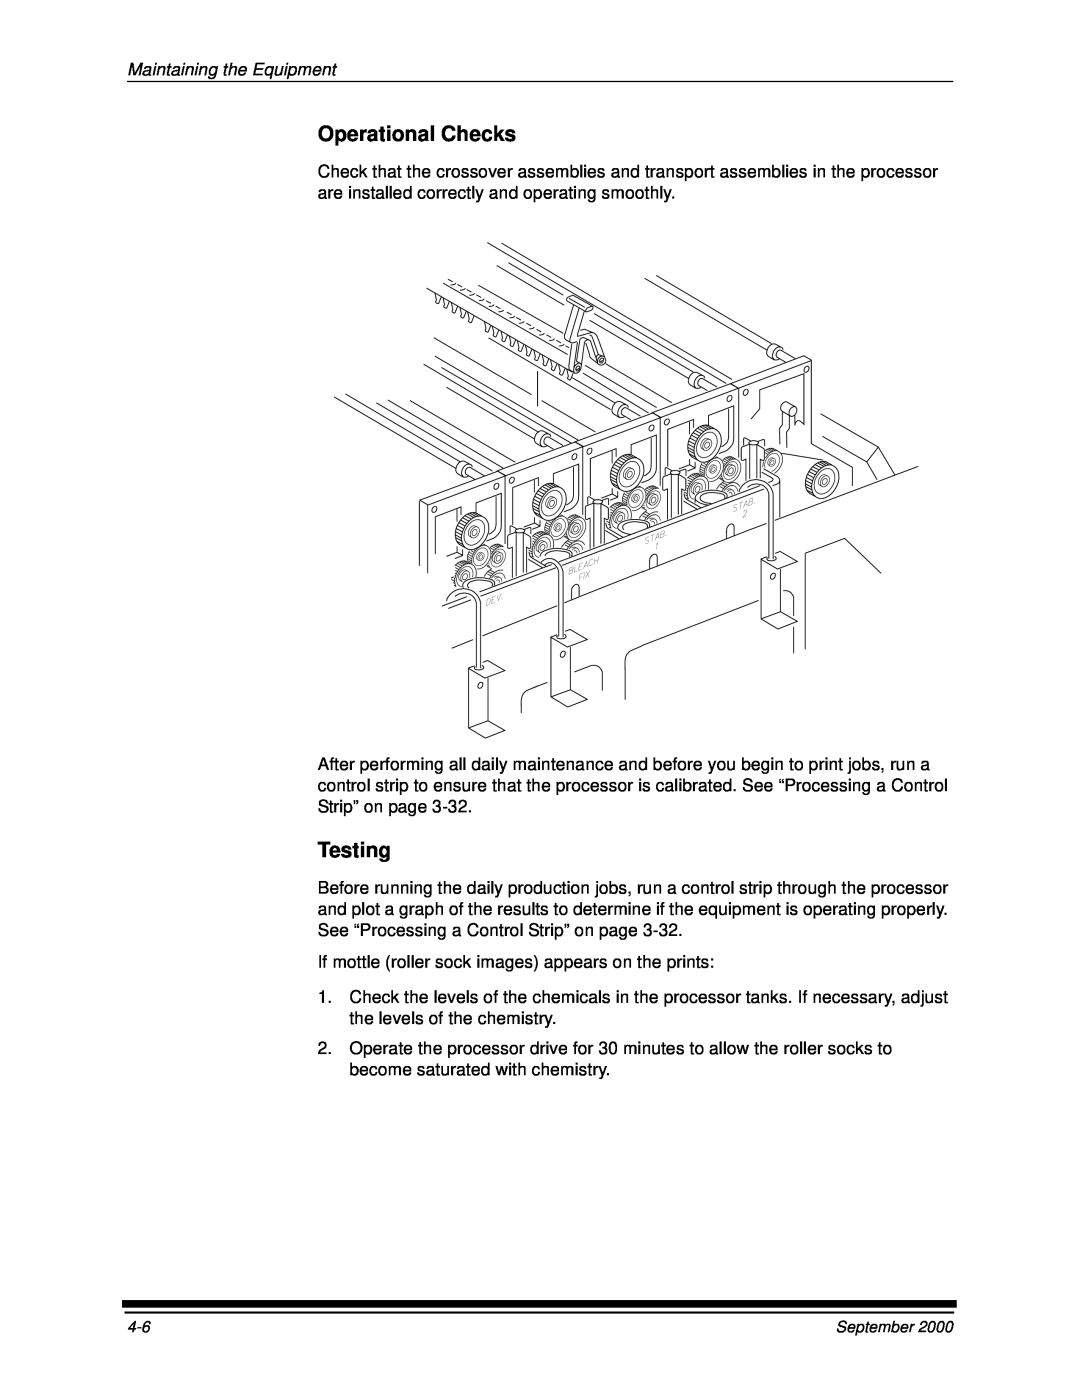 Kodak 20P manual Operational Checks, Testing, Maintaining the Equipment, September 